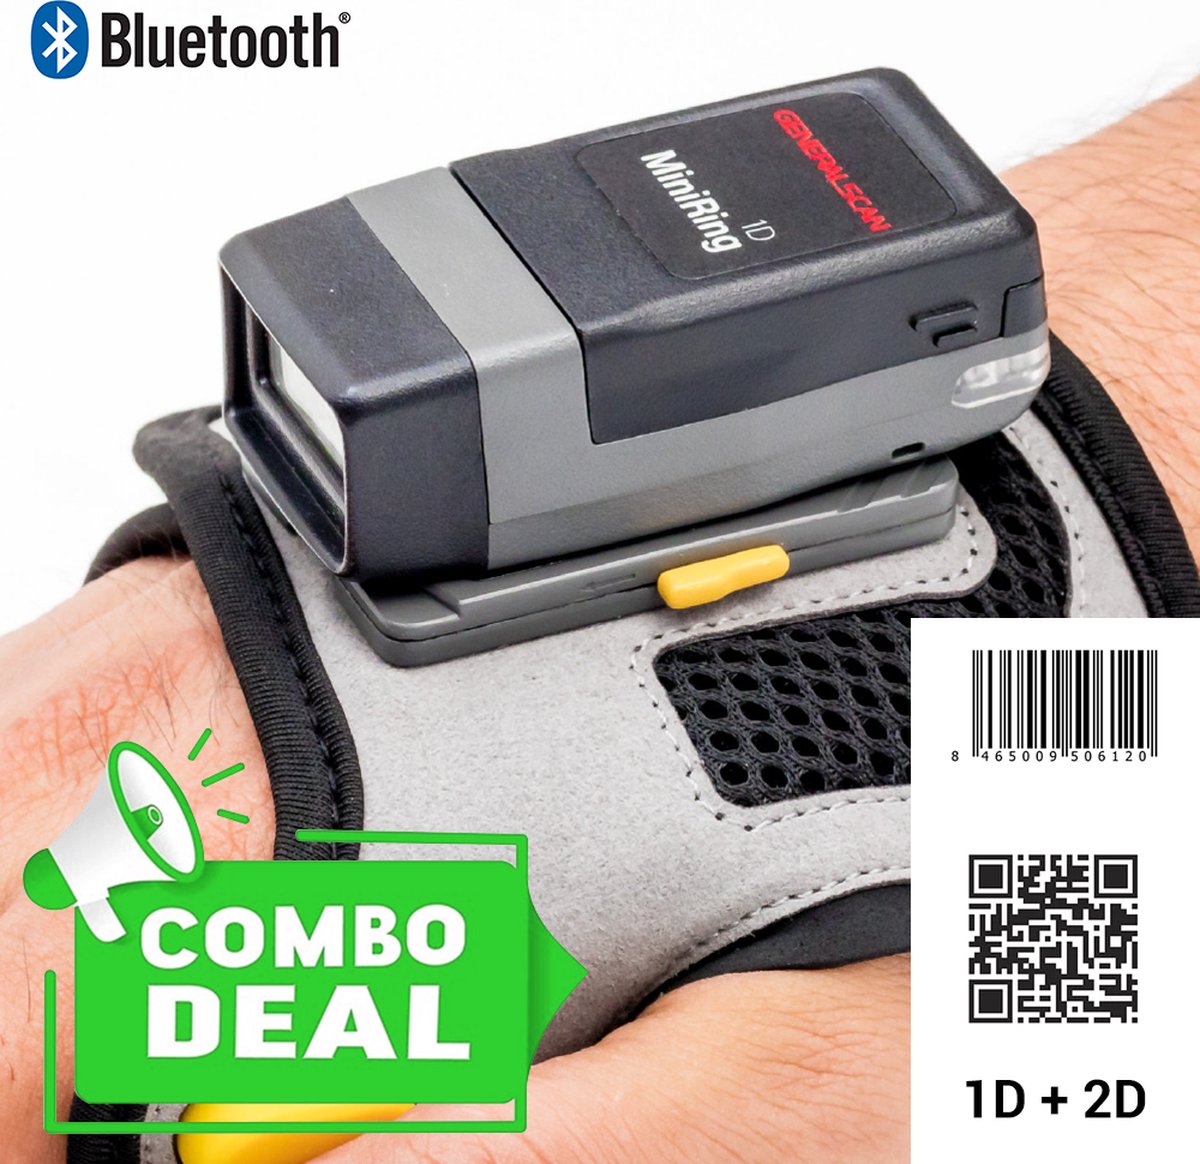 Generalscan GS R1521 with Scan Glove - Bluetooth 2D Barcode scanner - Combi Deal - 2D-barcodes - Handscanner